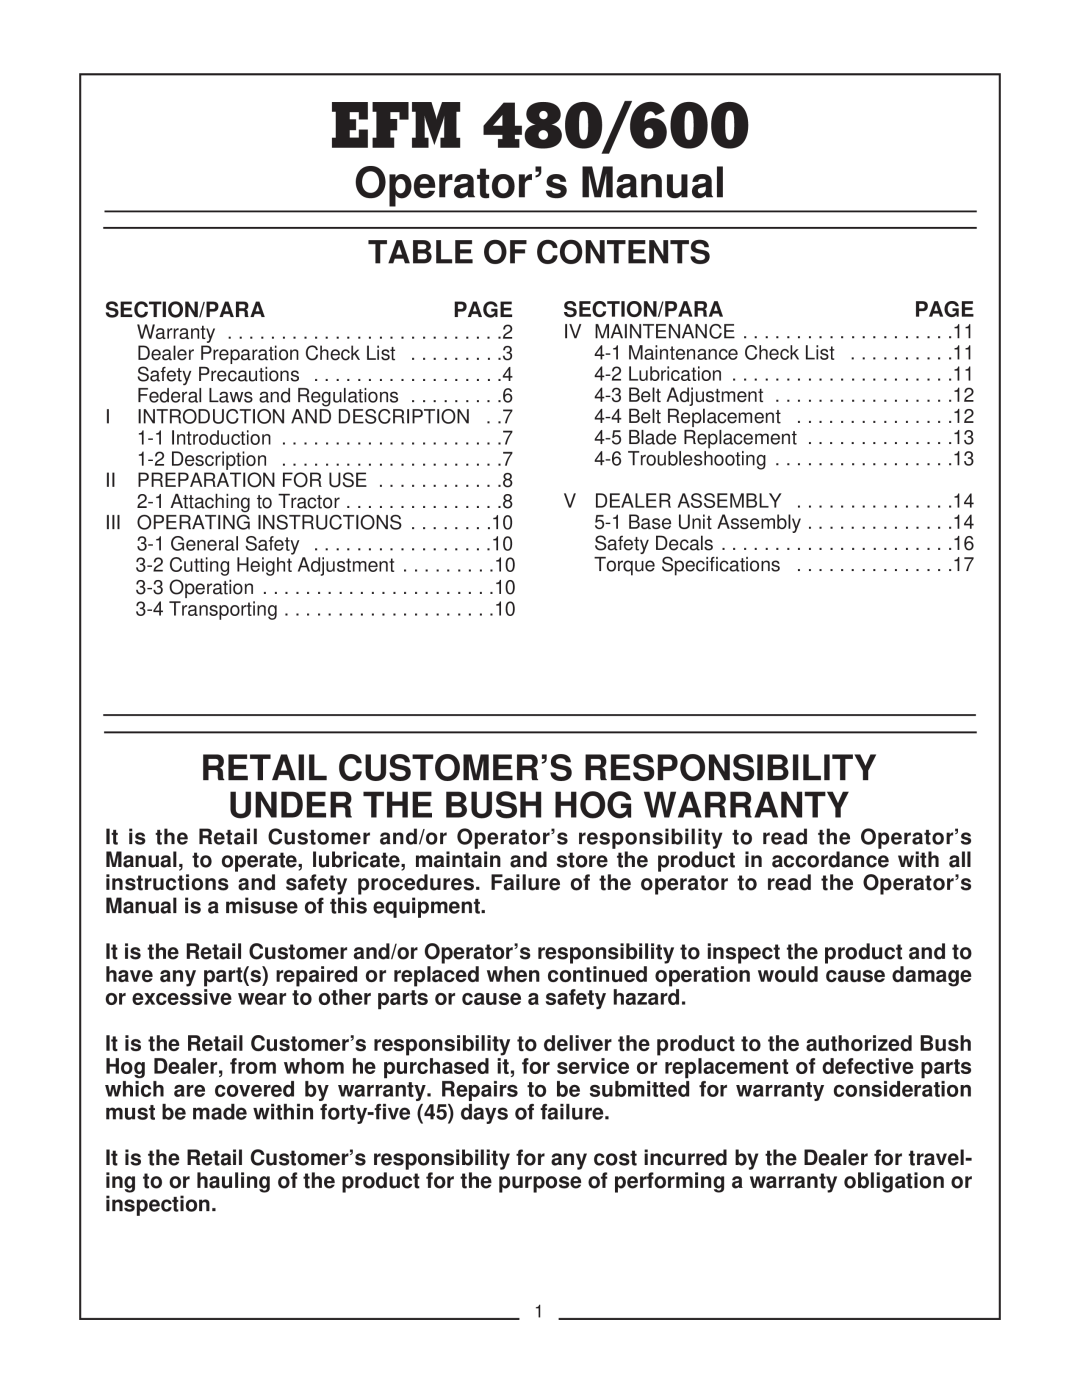 Bush Hog EFM 480/600 Table Of Contents, Operator’s Manual, Retail Customer’S Responsibility Under The Bush Hog Warranty 